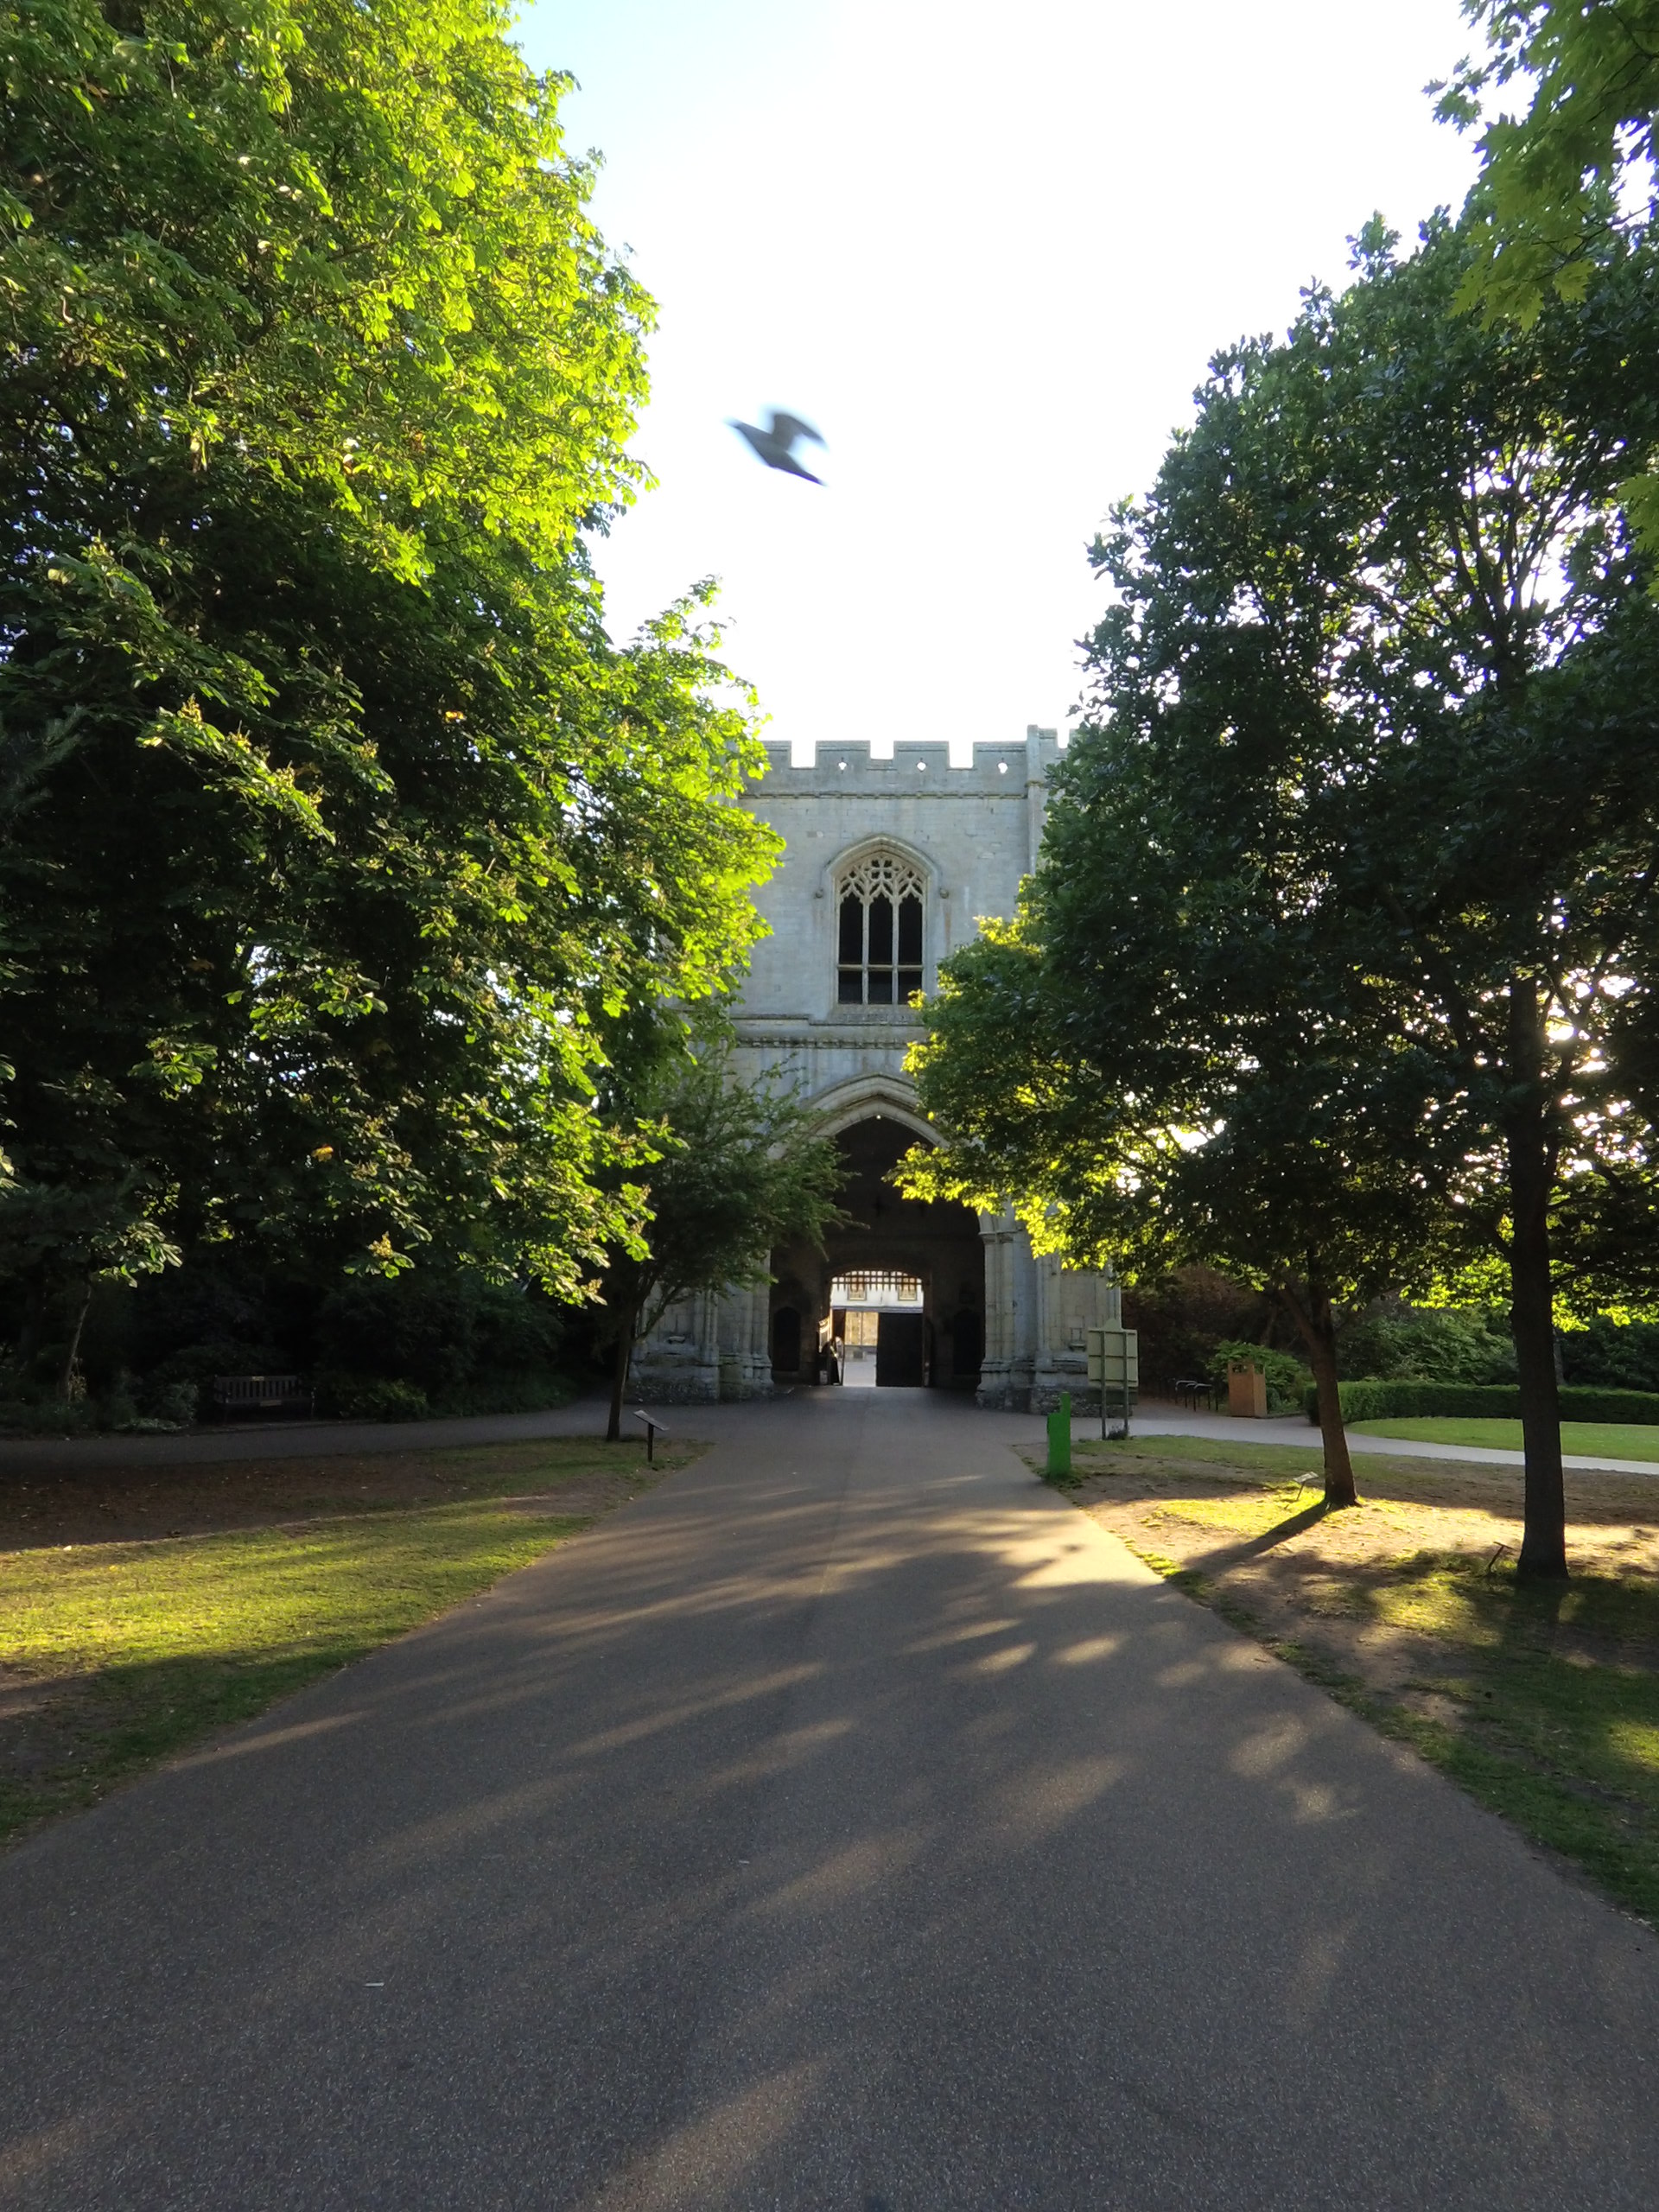 Main Abbey Gate at St Edmundsbury Abbey